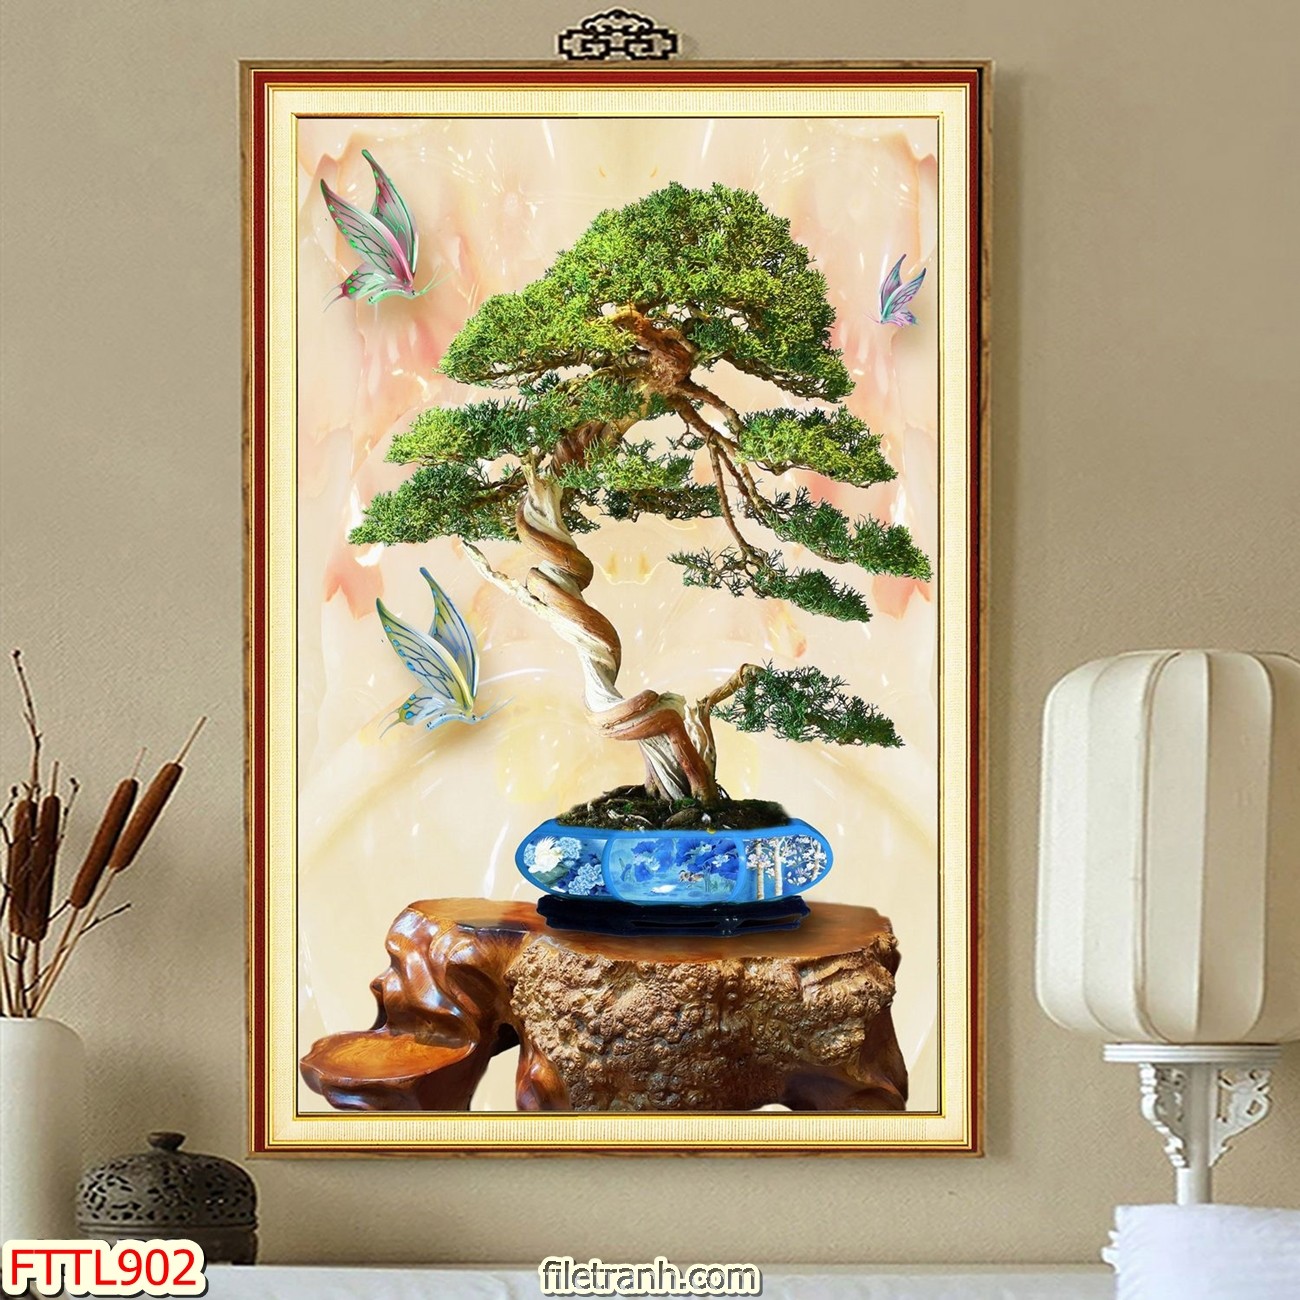 http://filetranh.com/file-tranh-chau-mai-bonsai/file-tranh-chau-mai-bonsai-fttl902.html